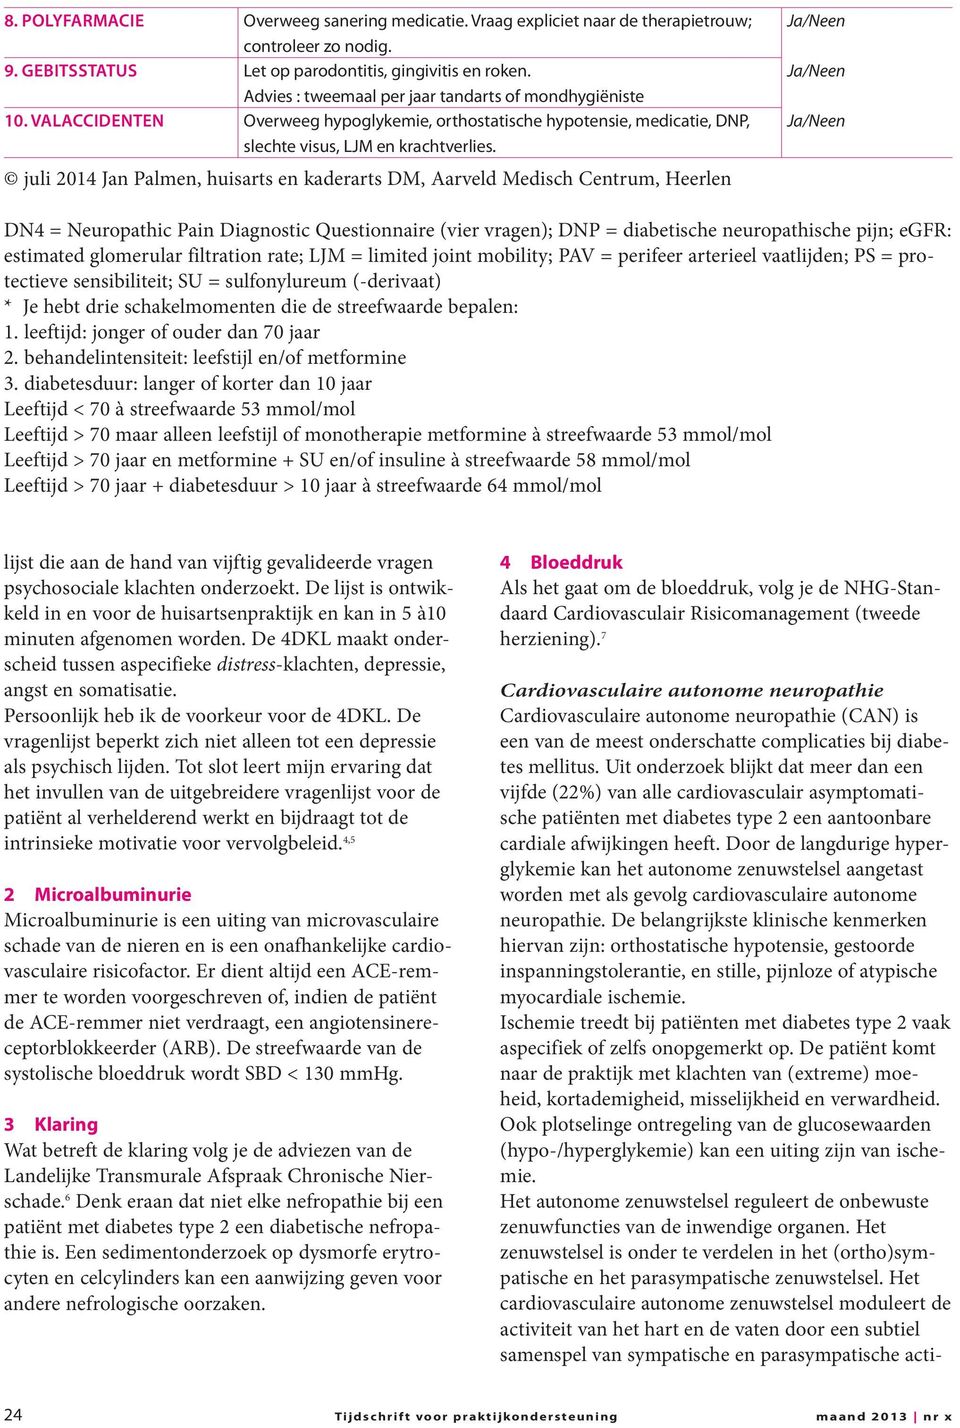 juli 2014 Jan Palmen, huisarts en kaderarts DM, Aarveld Medisch Centrum, Heerlen DN4 = Neuropathic Pain Diagnostic Questionnaire (vier vragen); DNP = diabetische neuropathische pijn; egfr: estimated